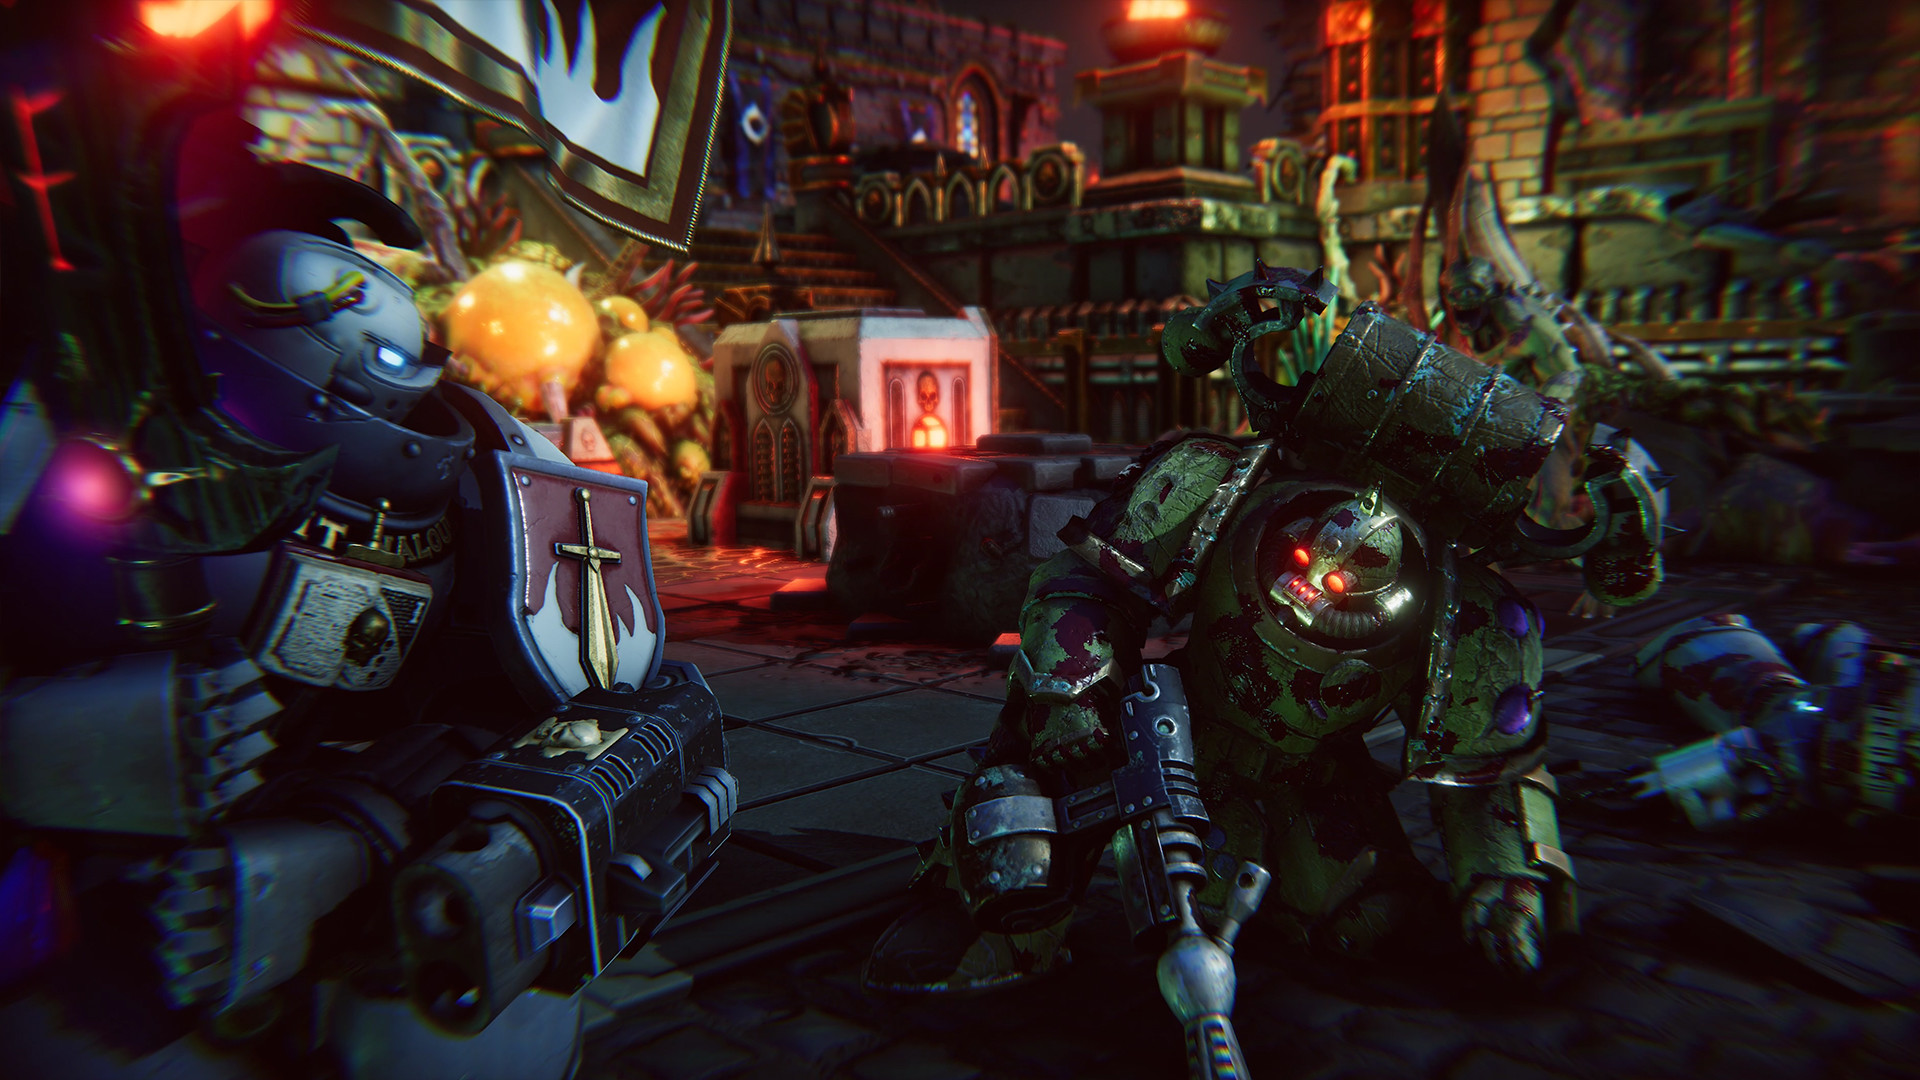 instaling Warhammer 40,000: Chaos Gate - Daemonhunters